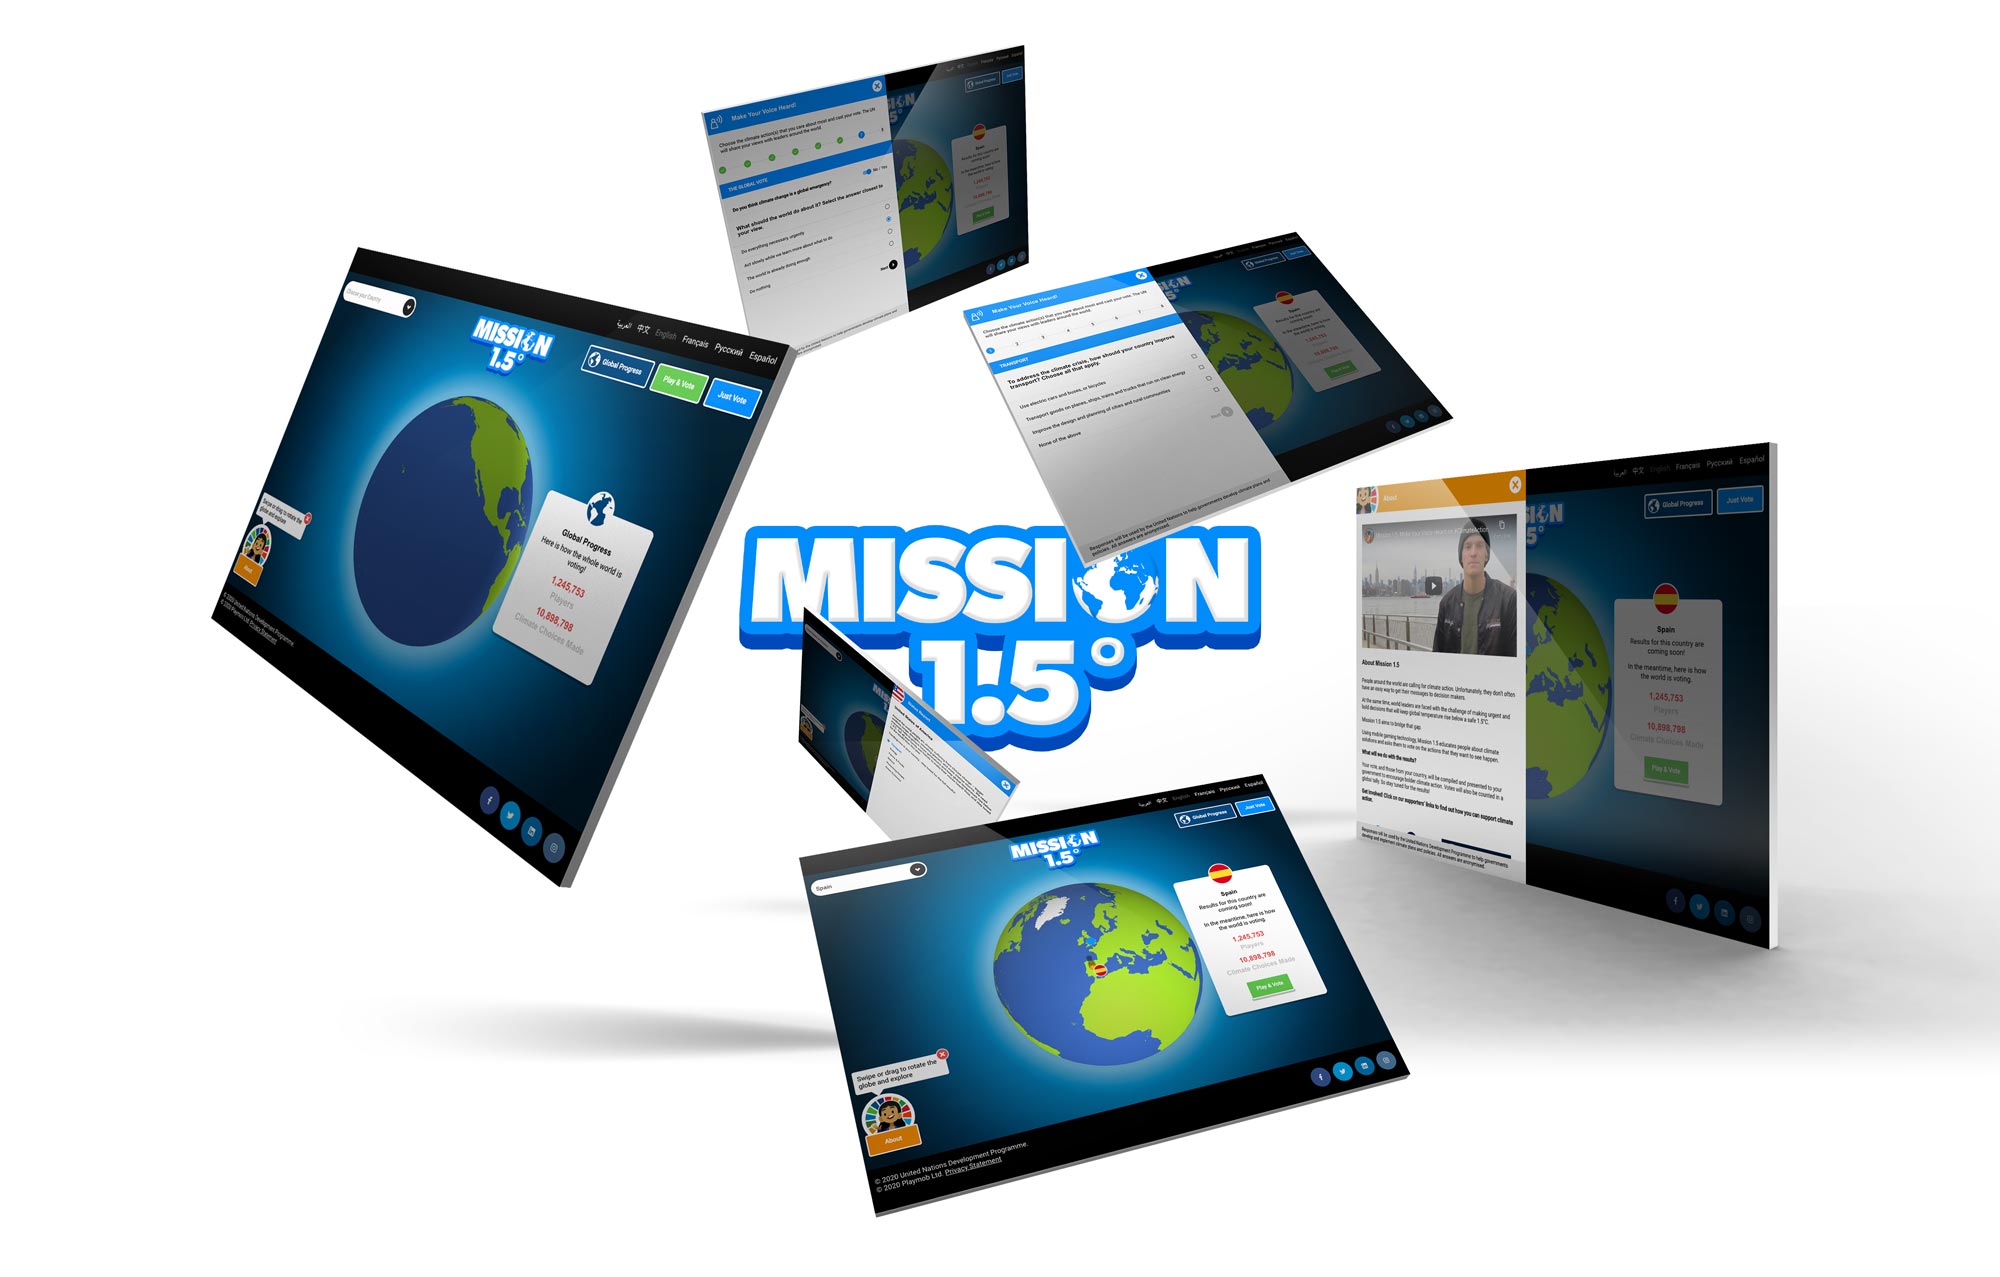 Mission 1.5 image